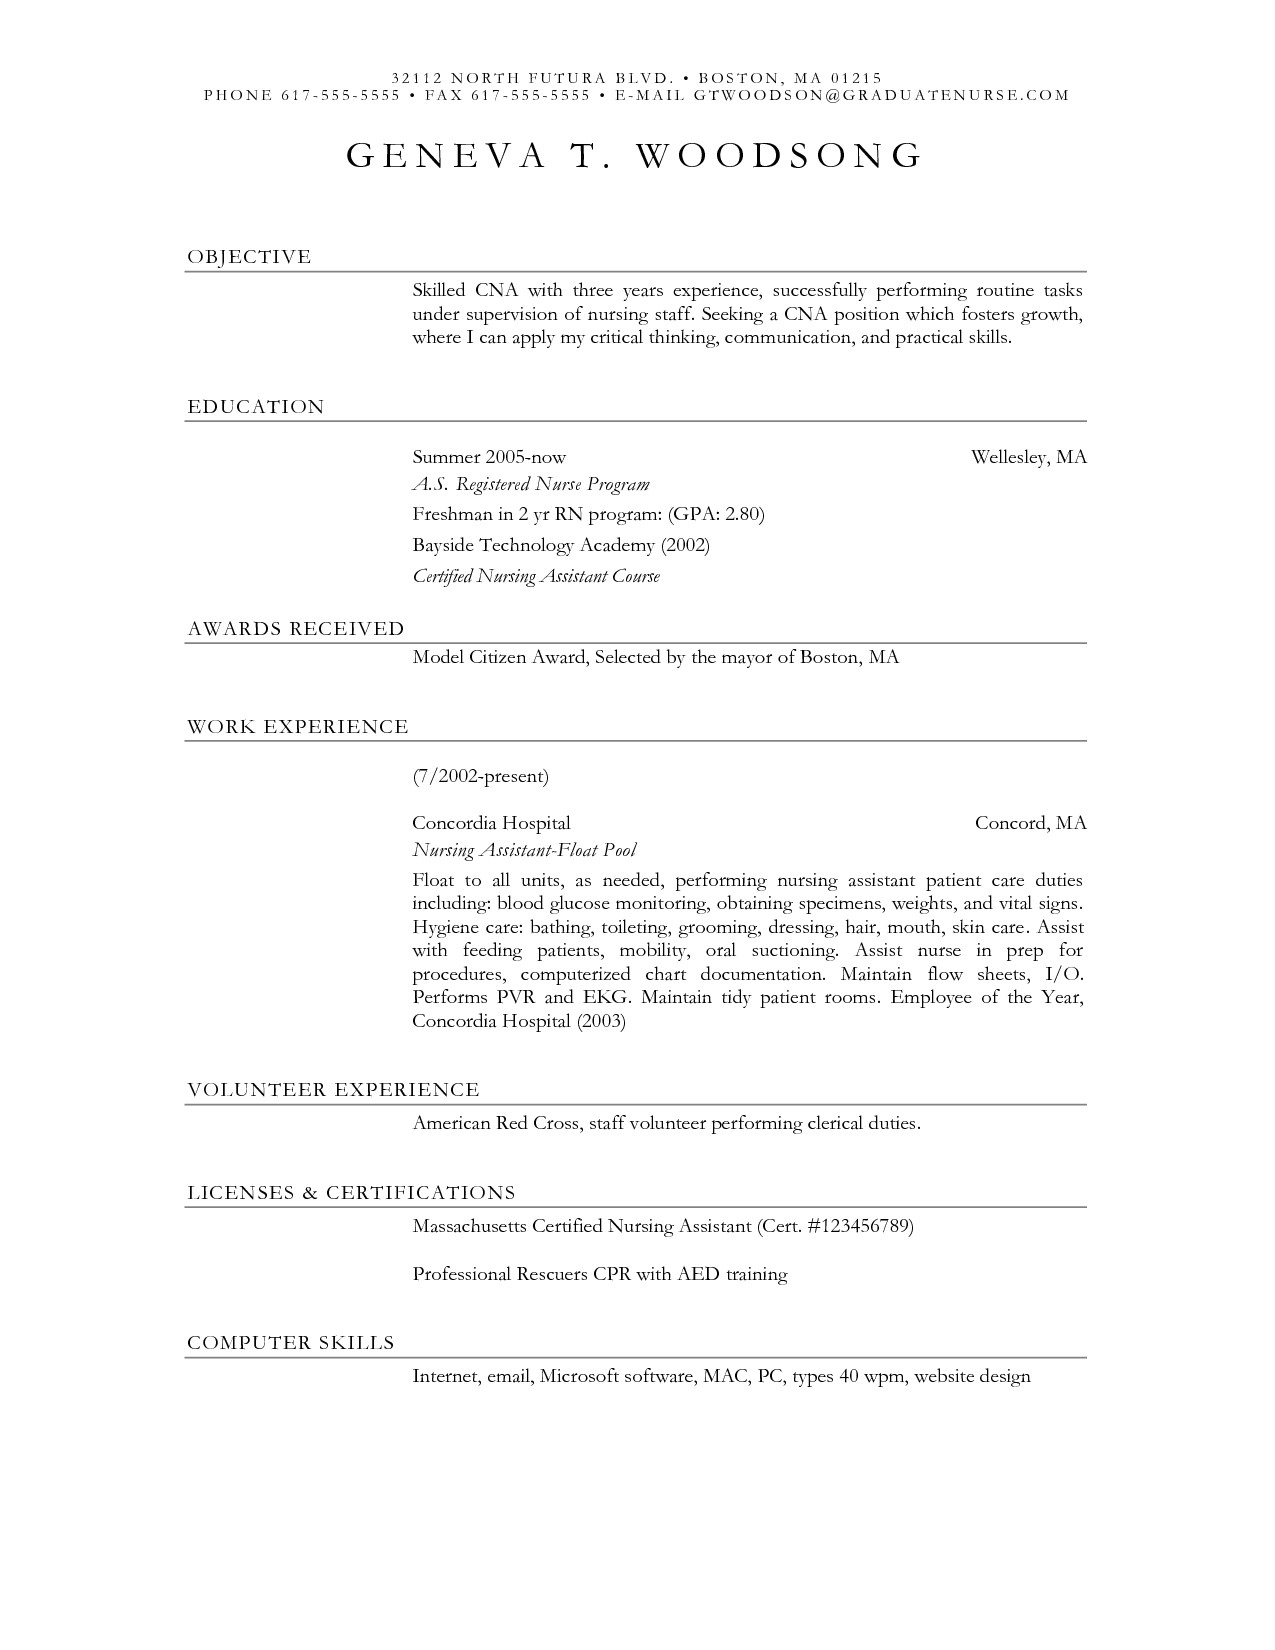 certified nursing assistant resume objective needed on resume resume samples 31900